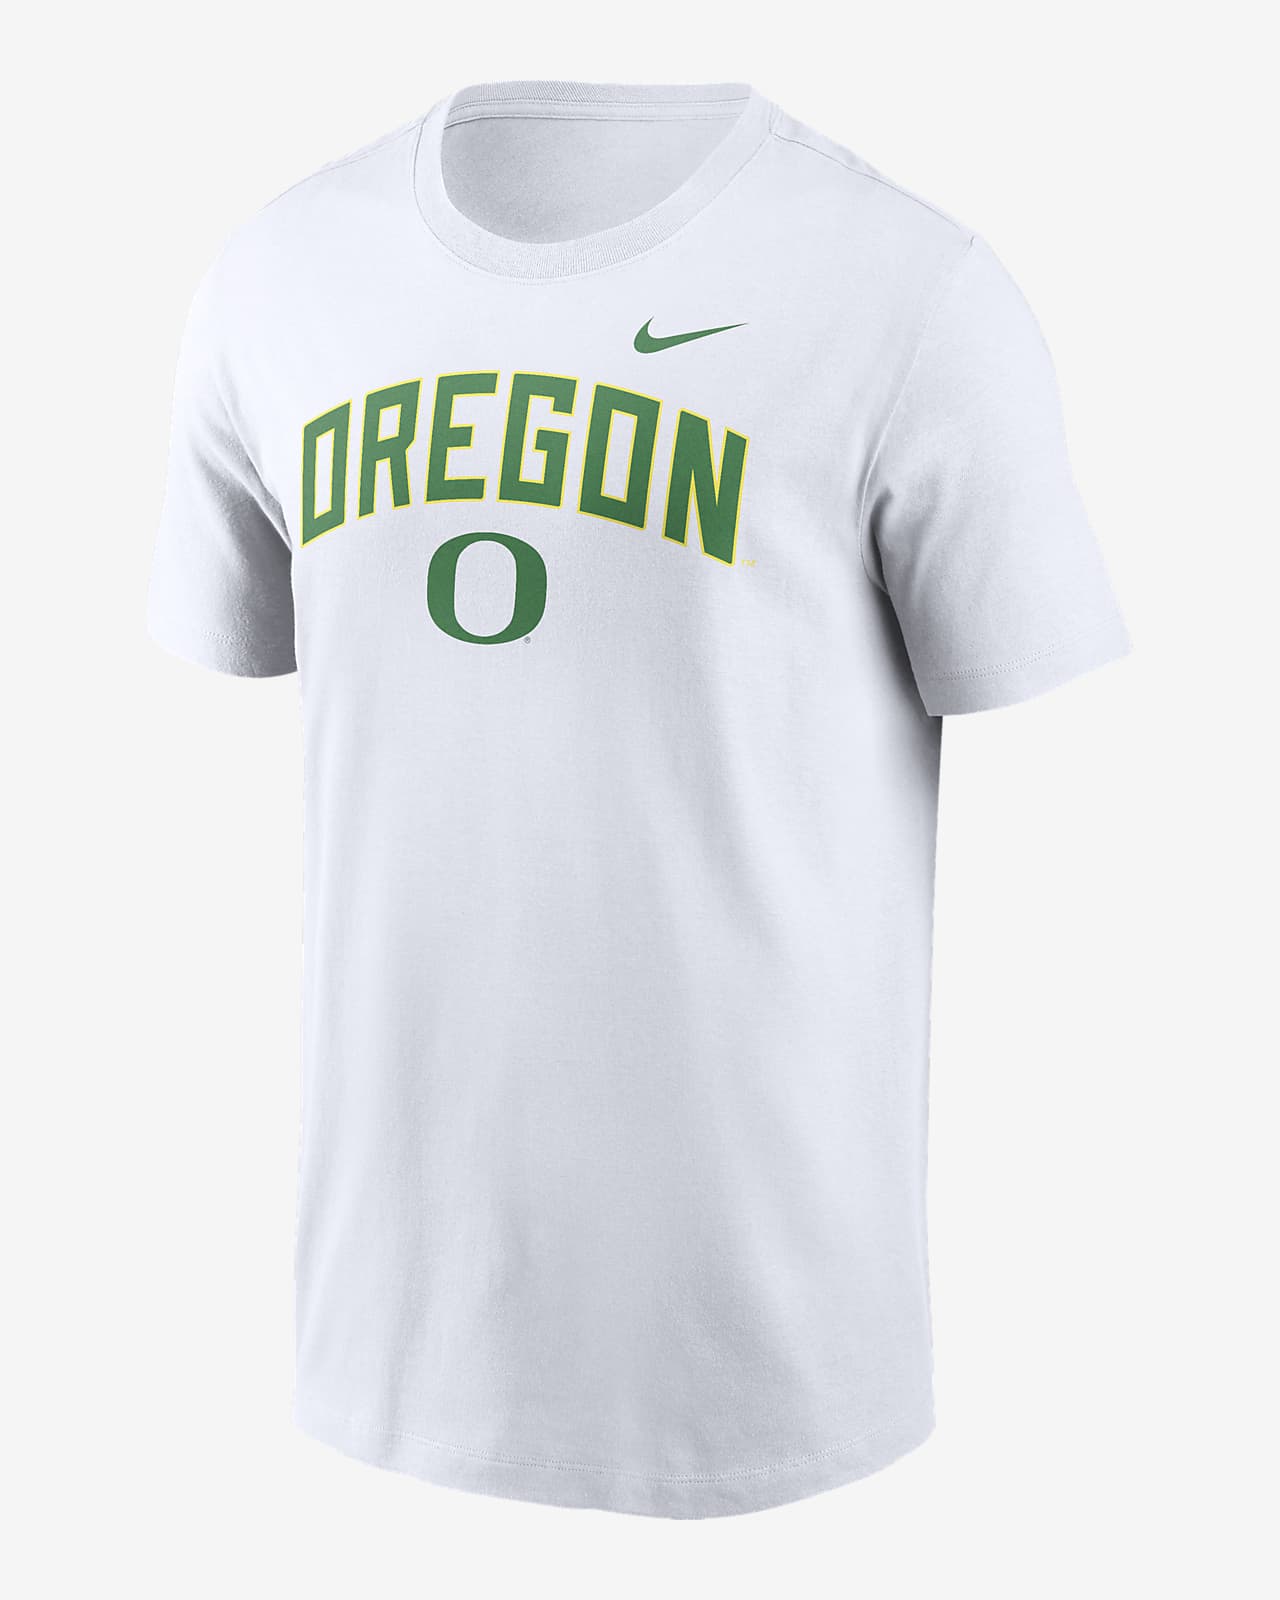 Playera universitaria Nike para hombre Oregon Ducks Blitz